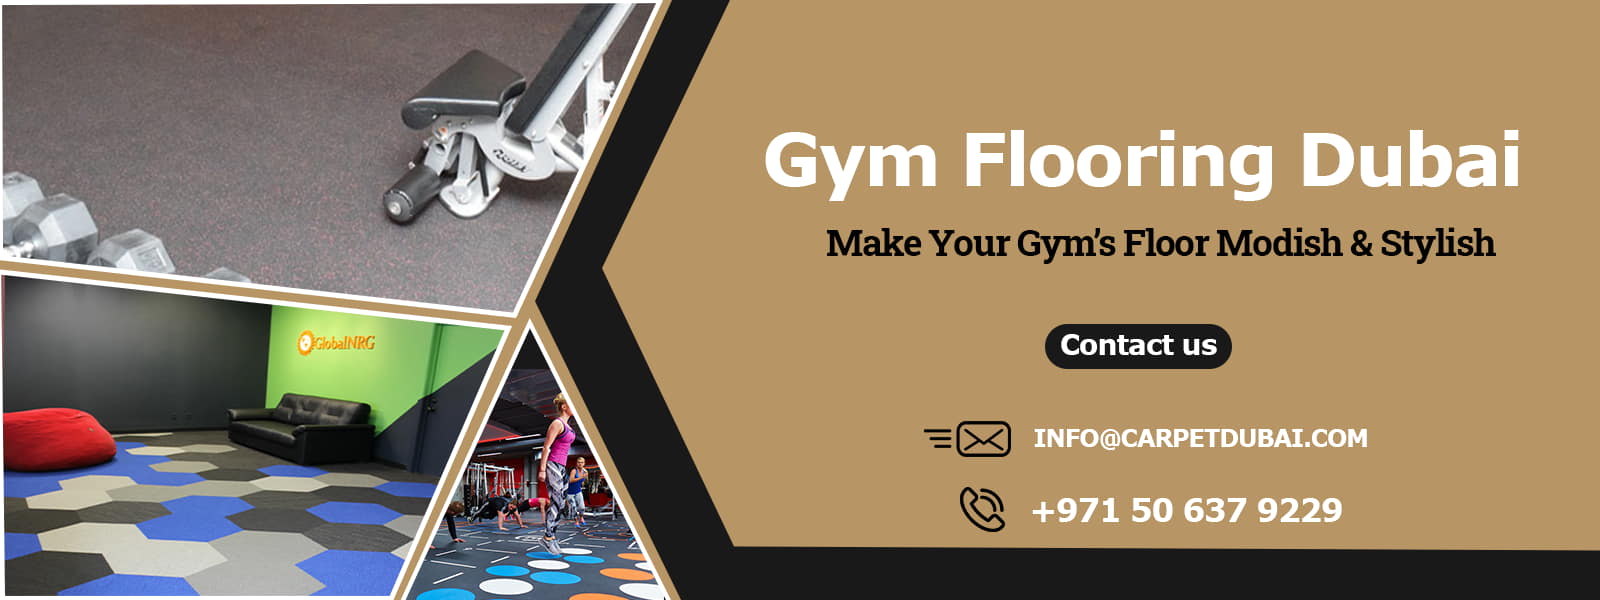 Gym-Flooring-Dubai banner